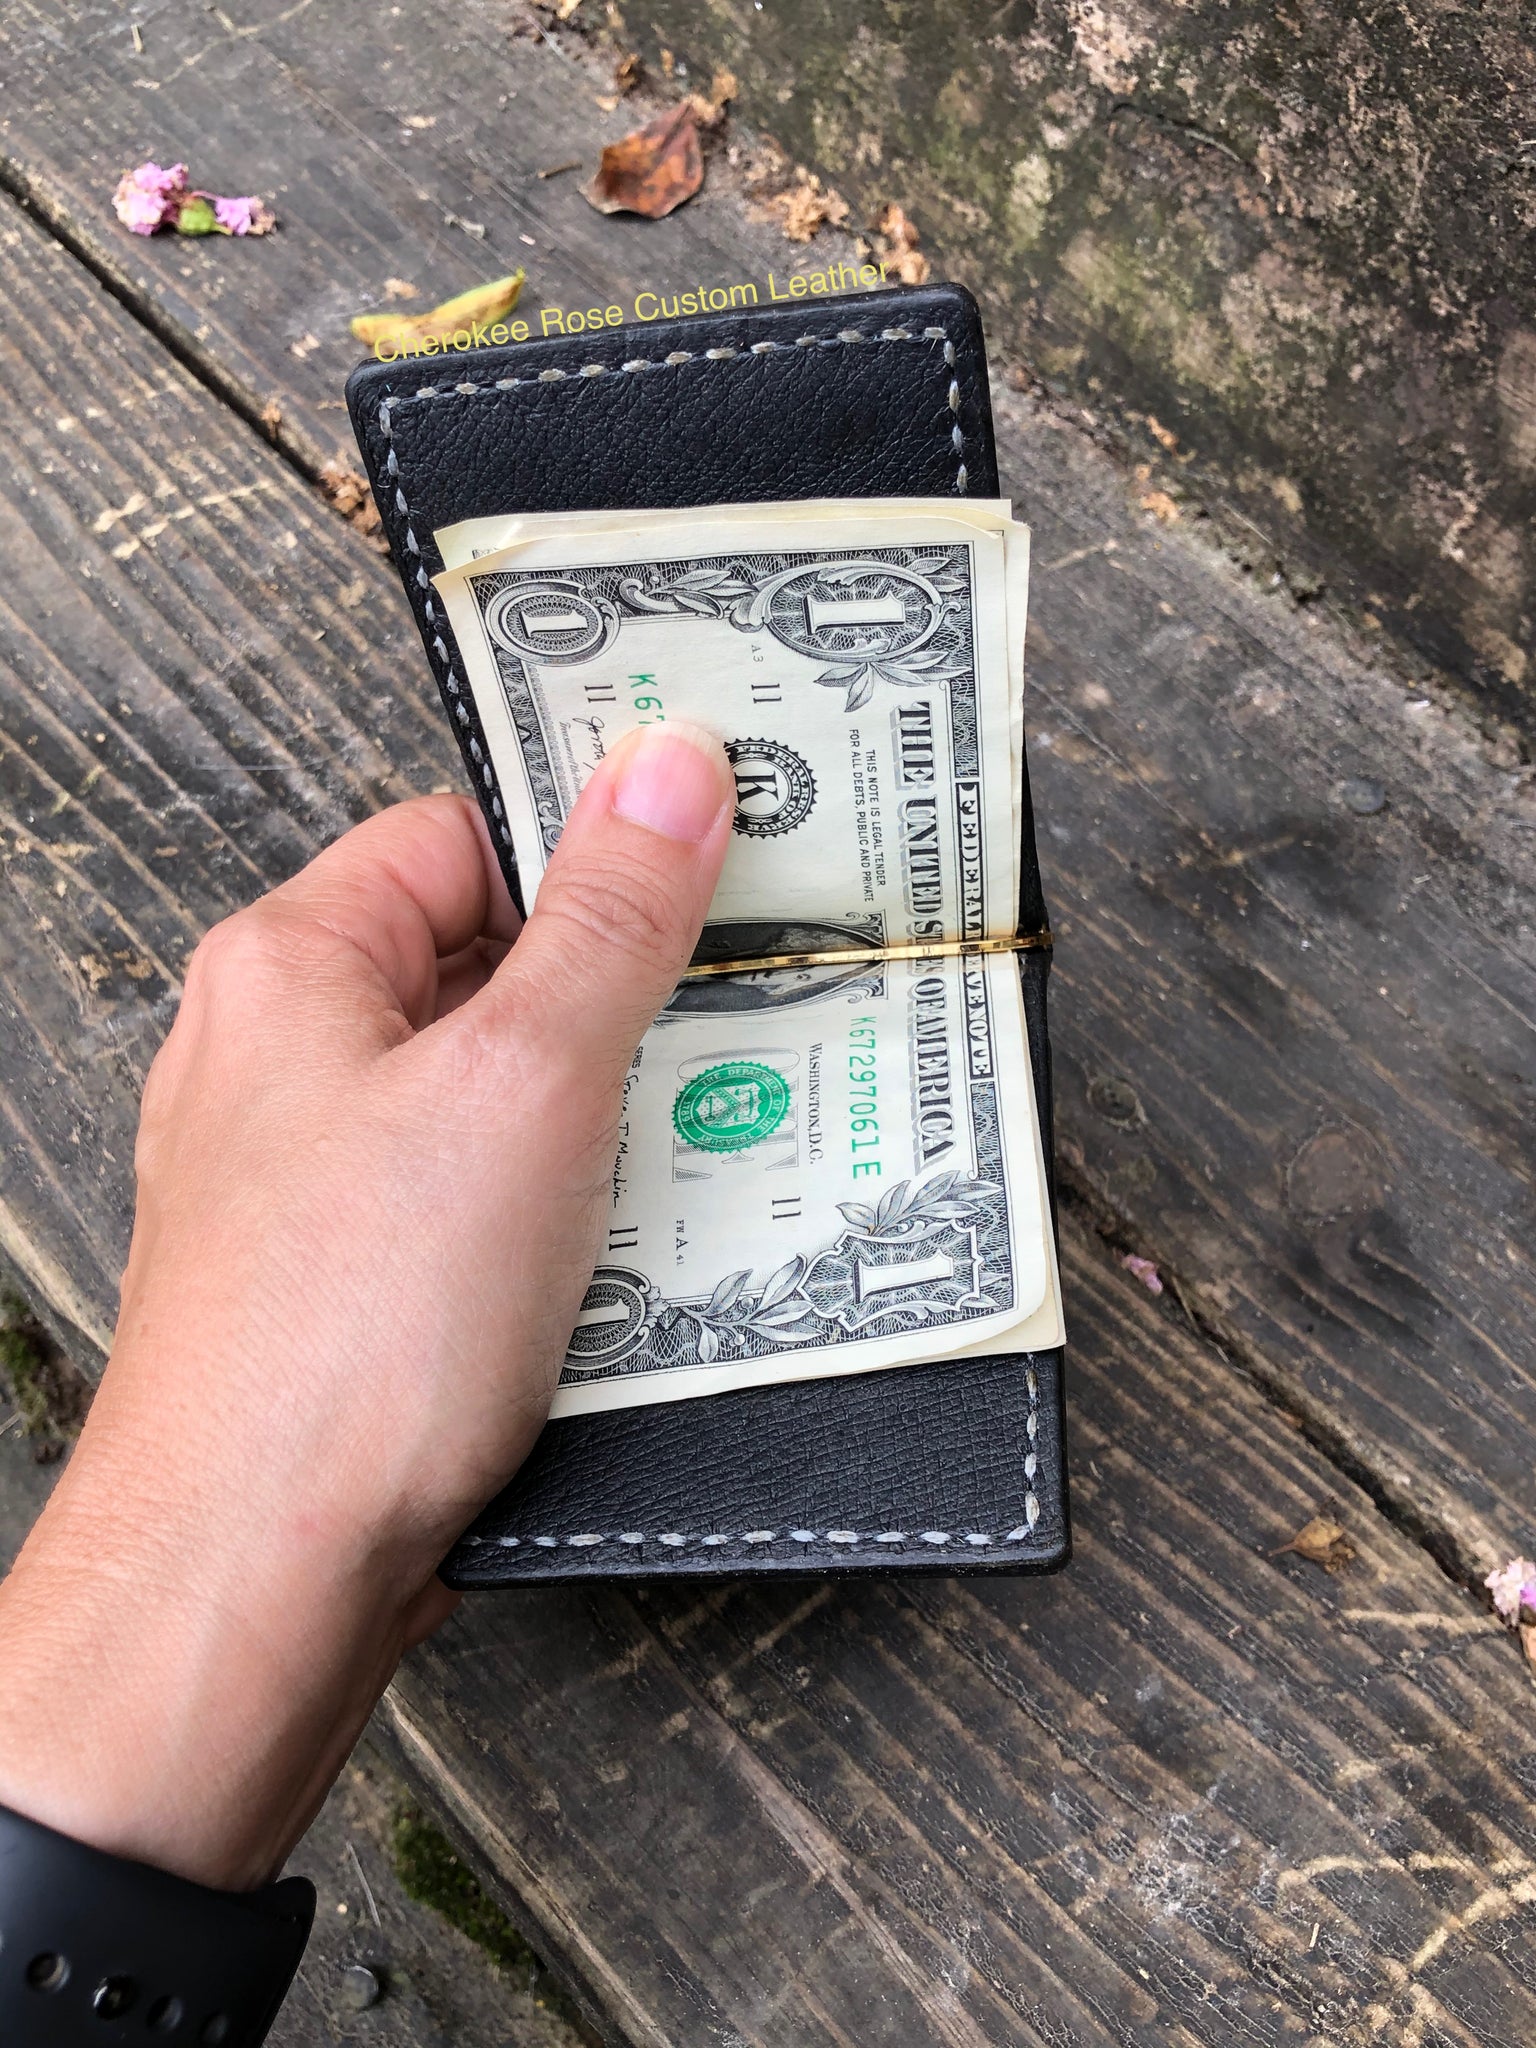 Money Clip Wallet, Personalized Leather Money Clip, Mens Money